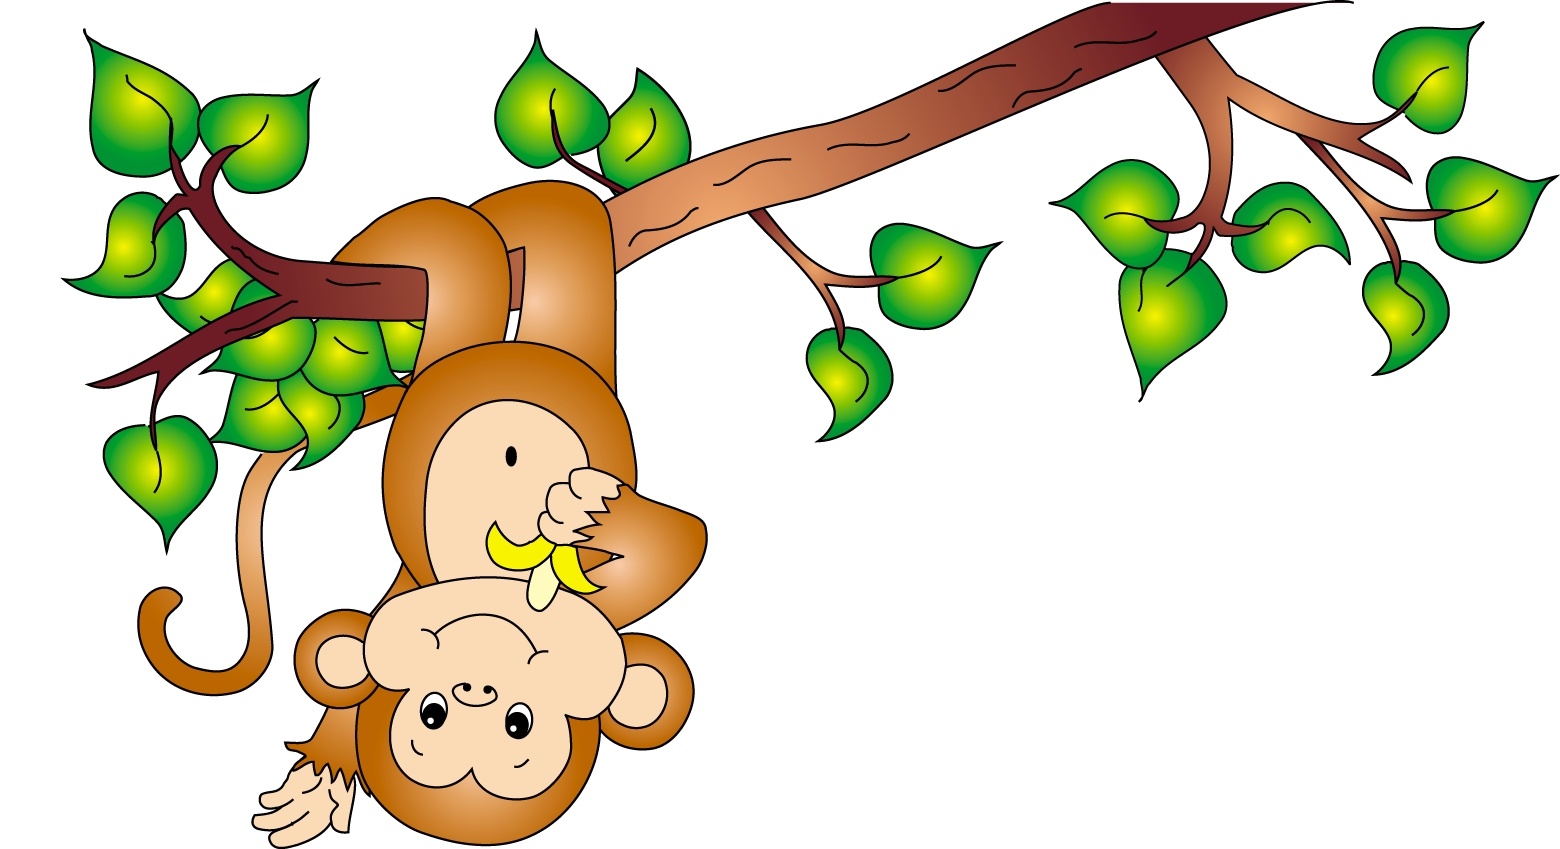 Wallpapers For > Cute Cartoon Monkey Wallpaper